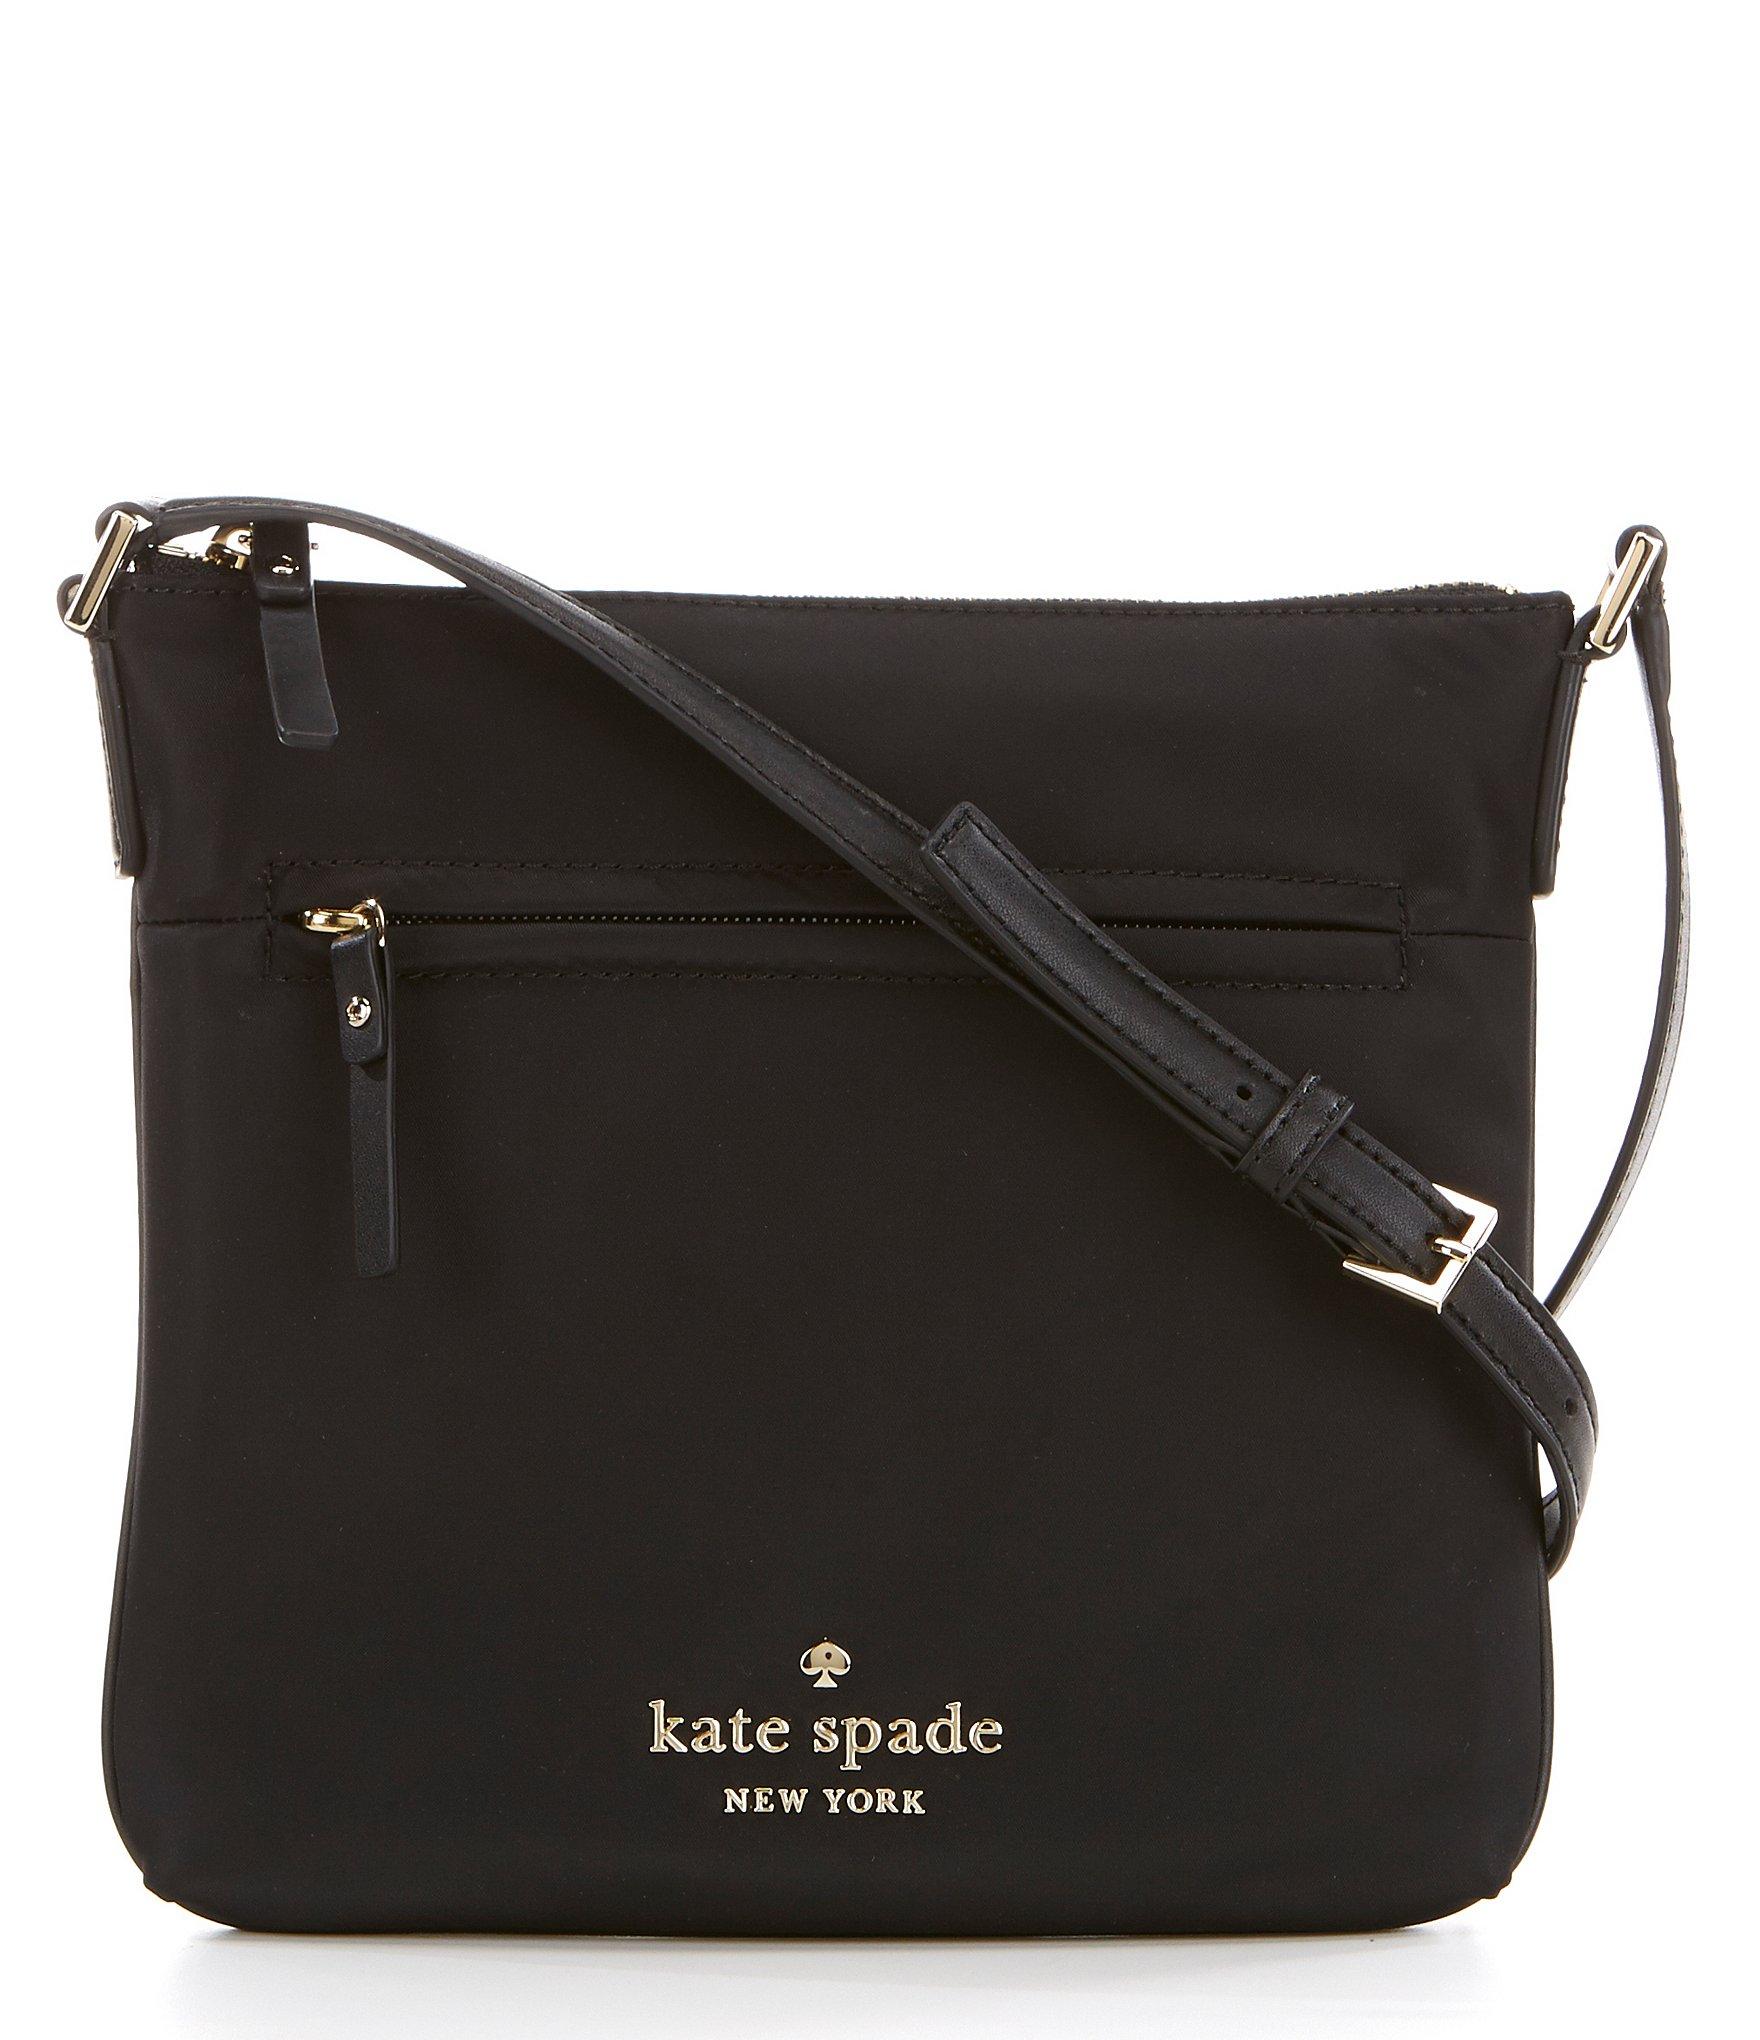 Kate spade new york Watson Lane Collection Hester Cross-body Bag in Black | Lyst